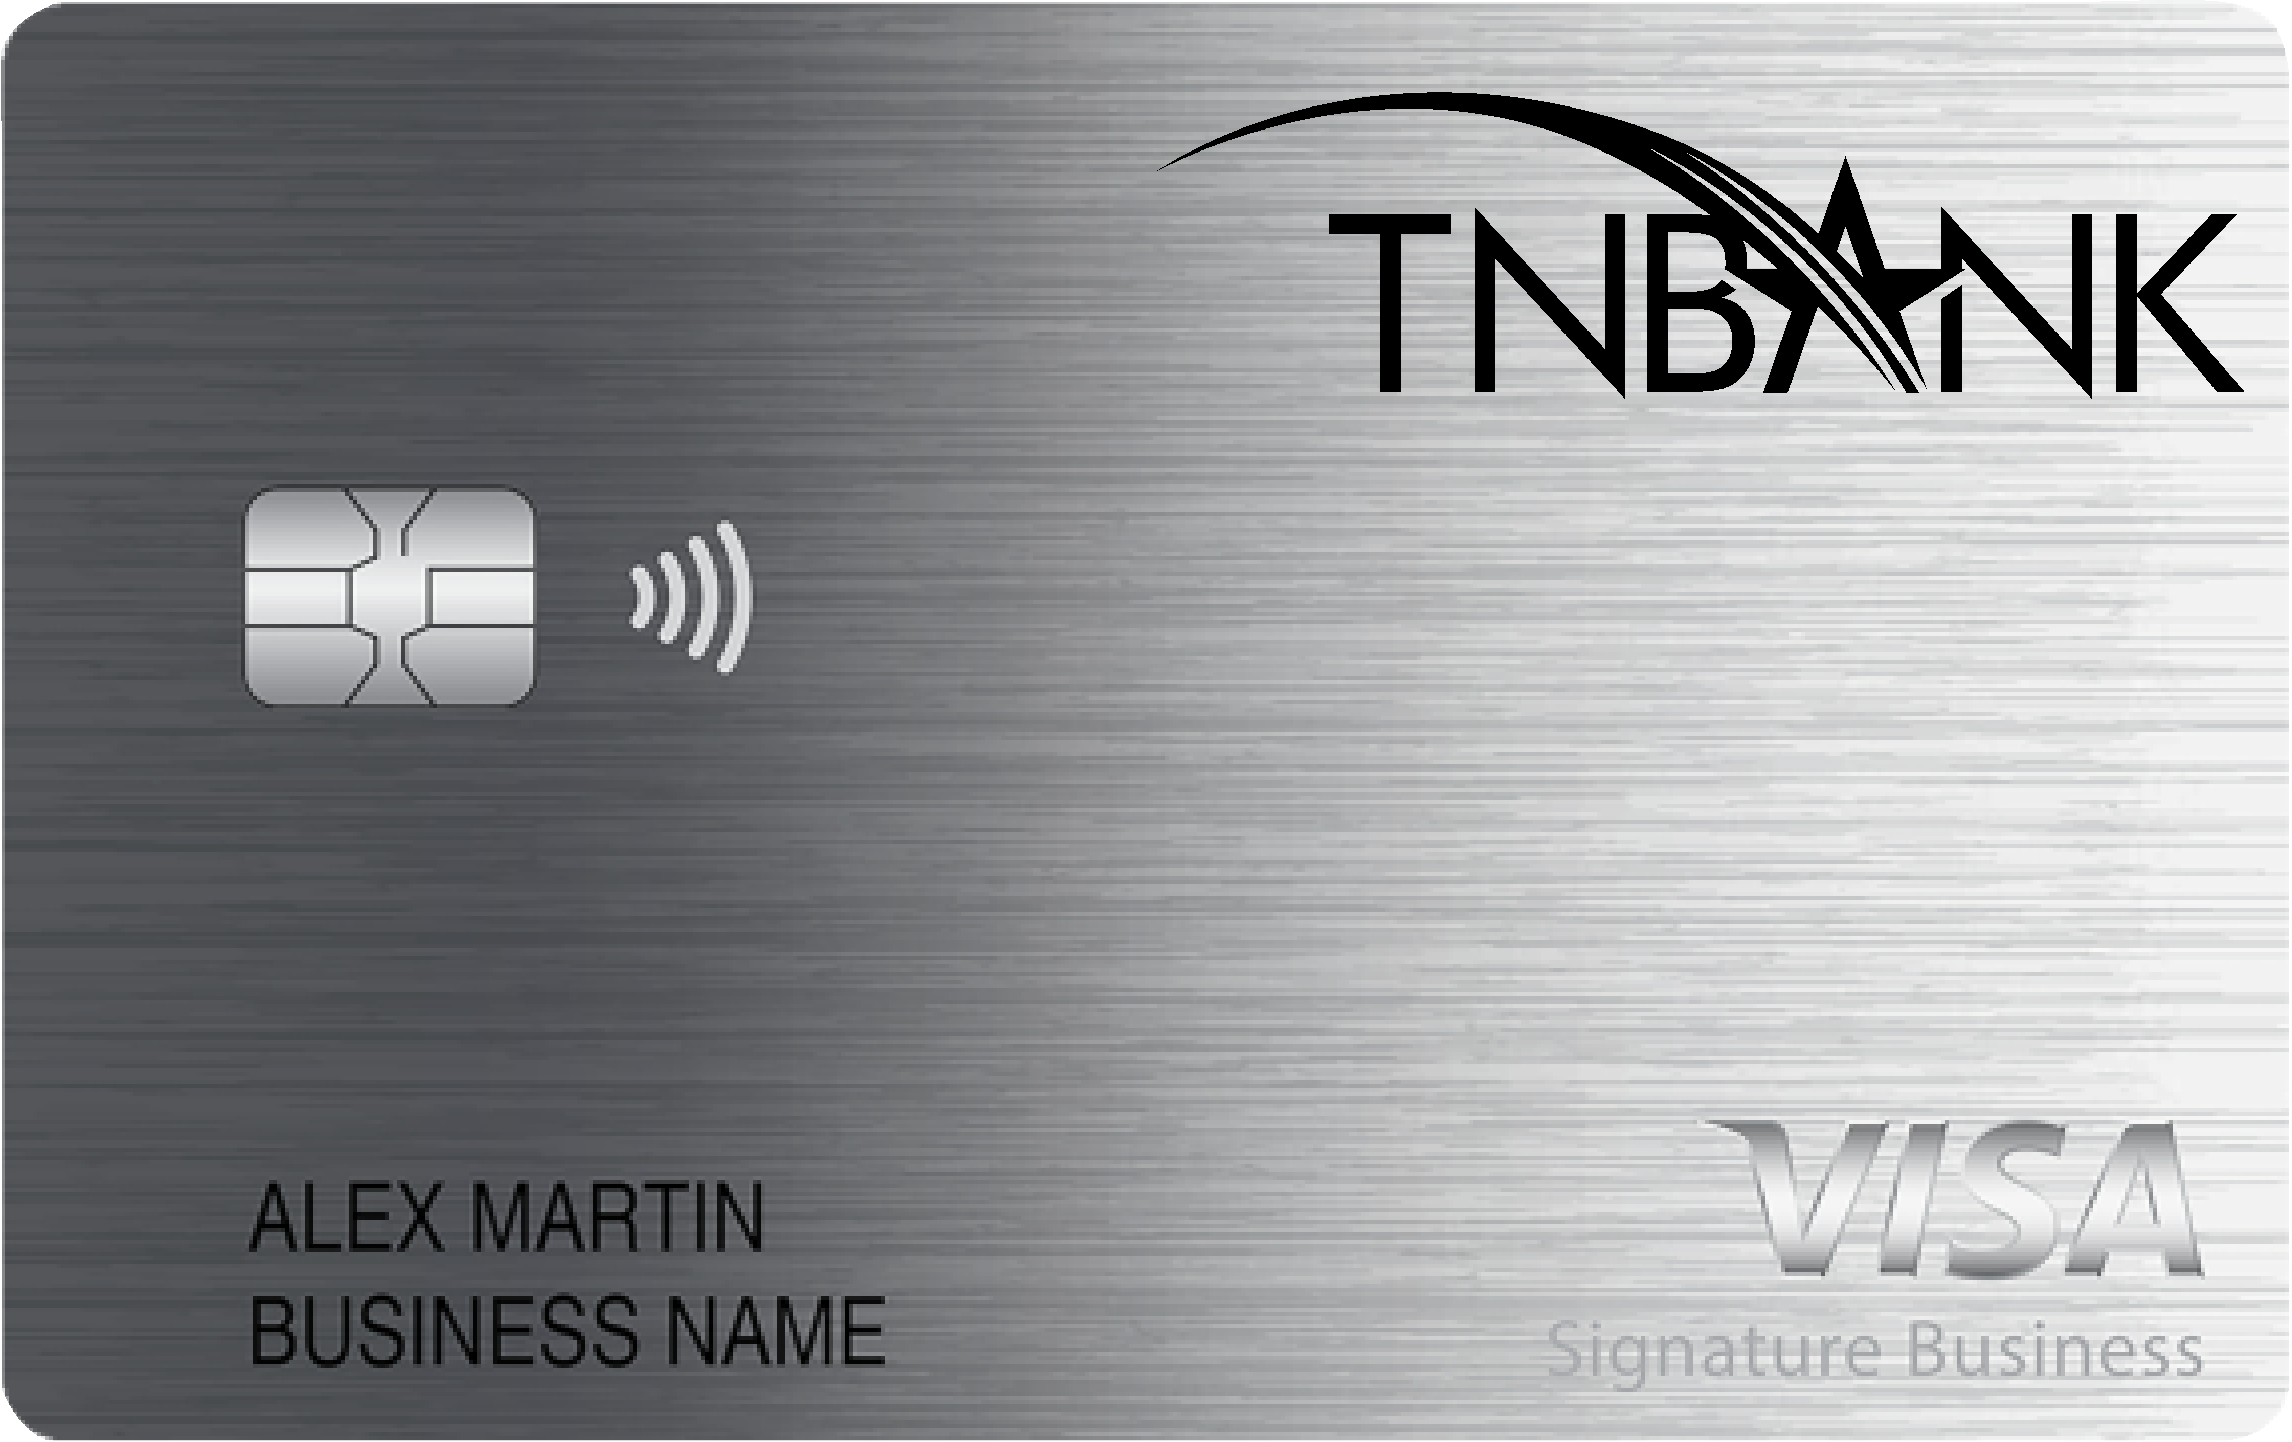 TNBANK Smart Business Rewards Card